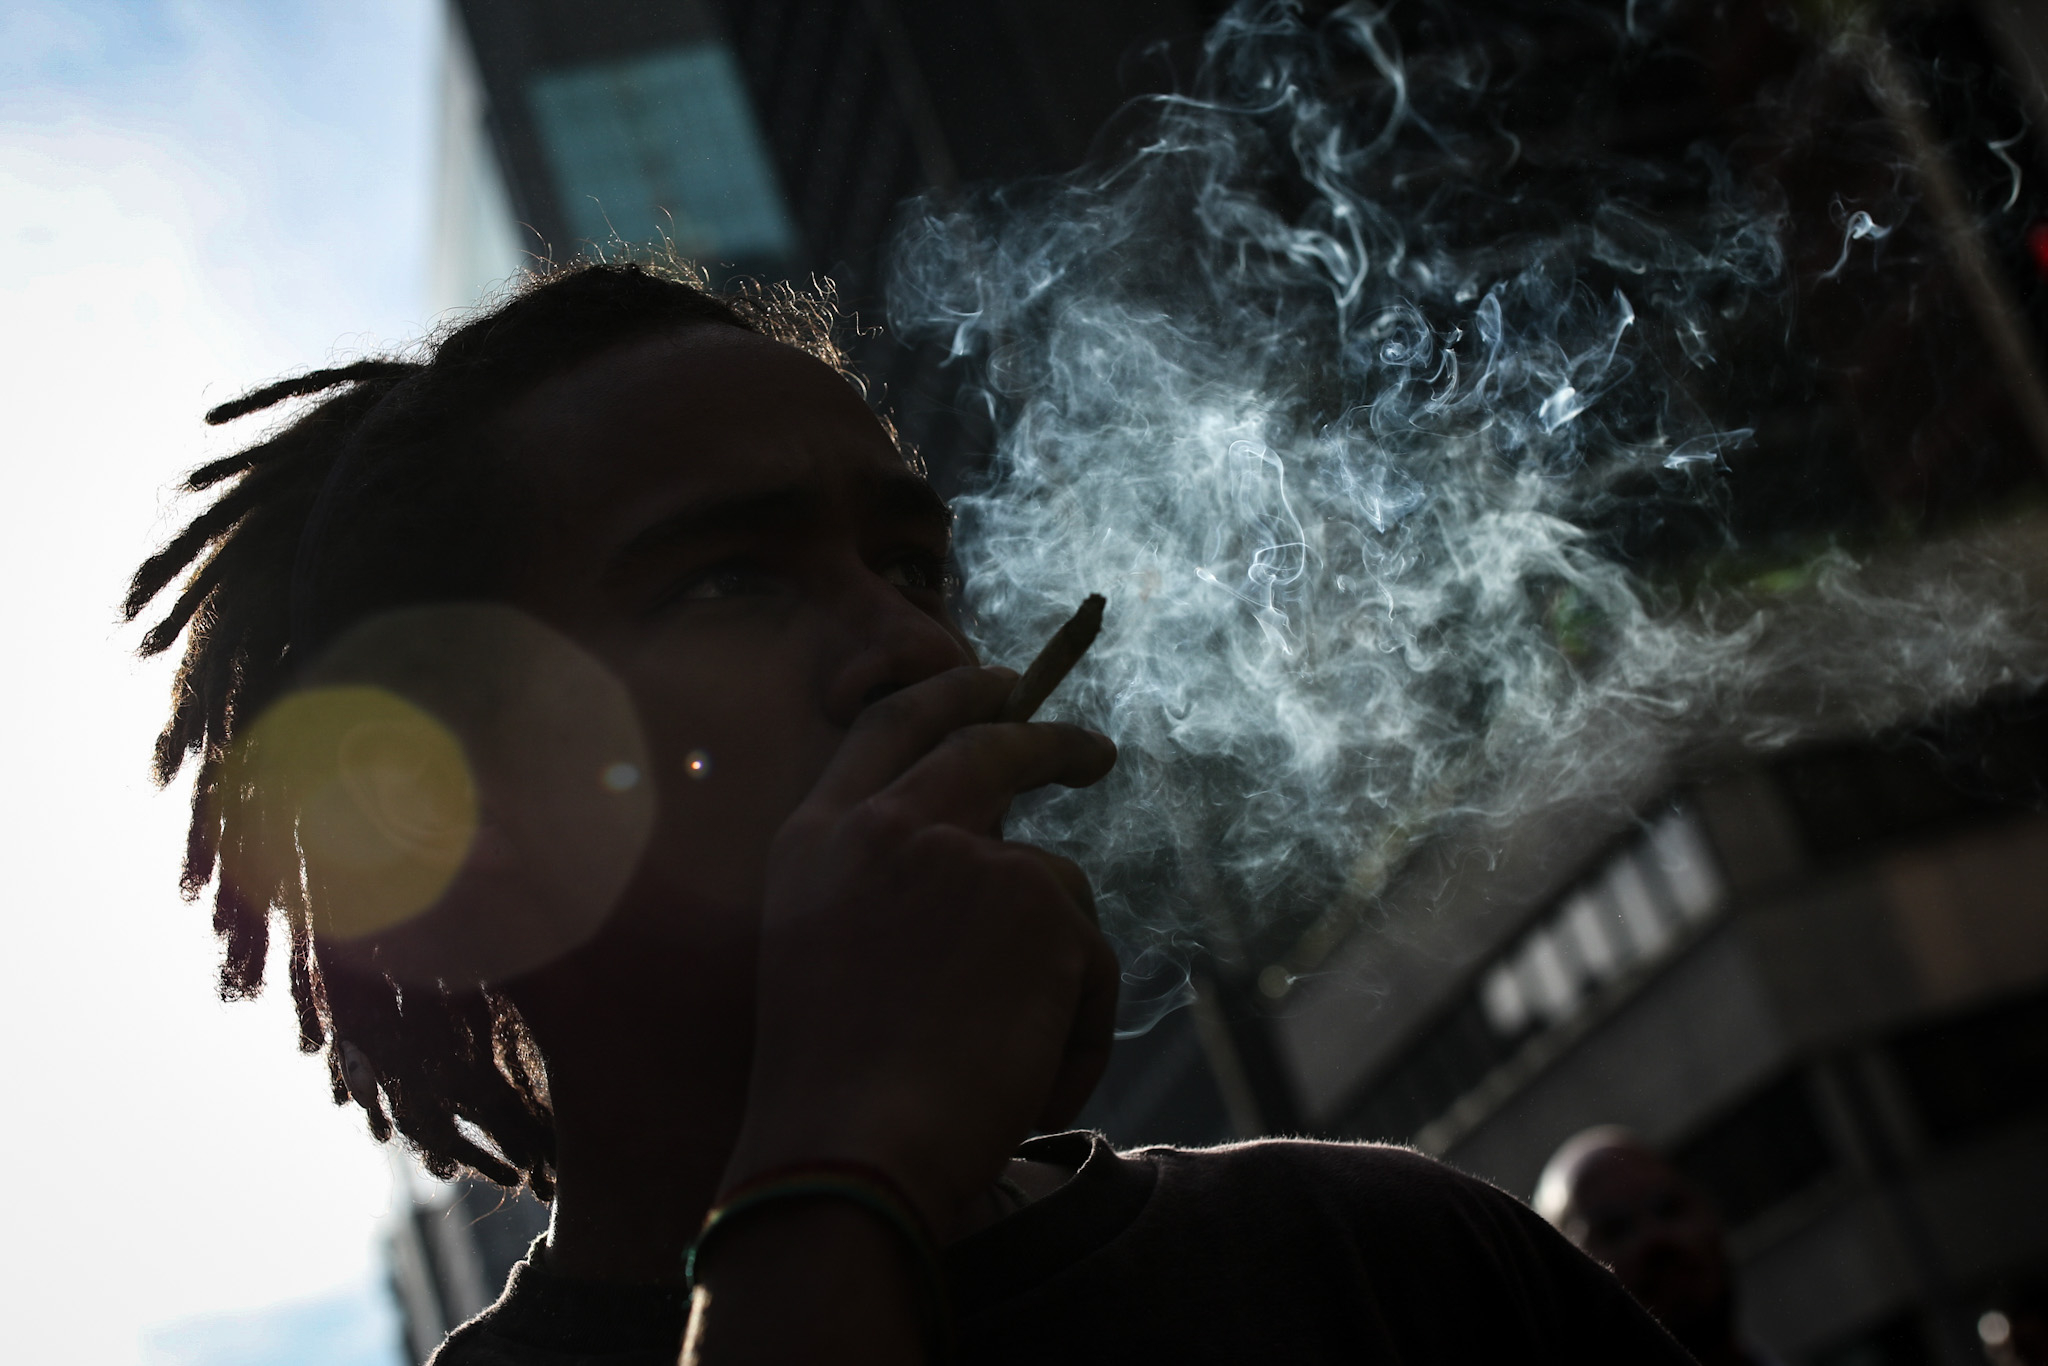 brazil’s supreme court decriminalizes marijuana. but the issue is nuanced